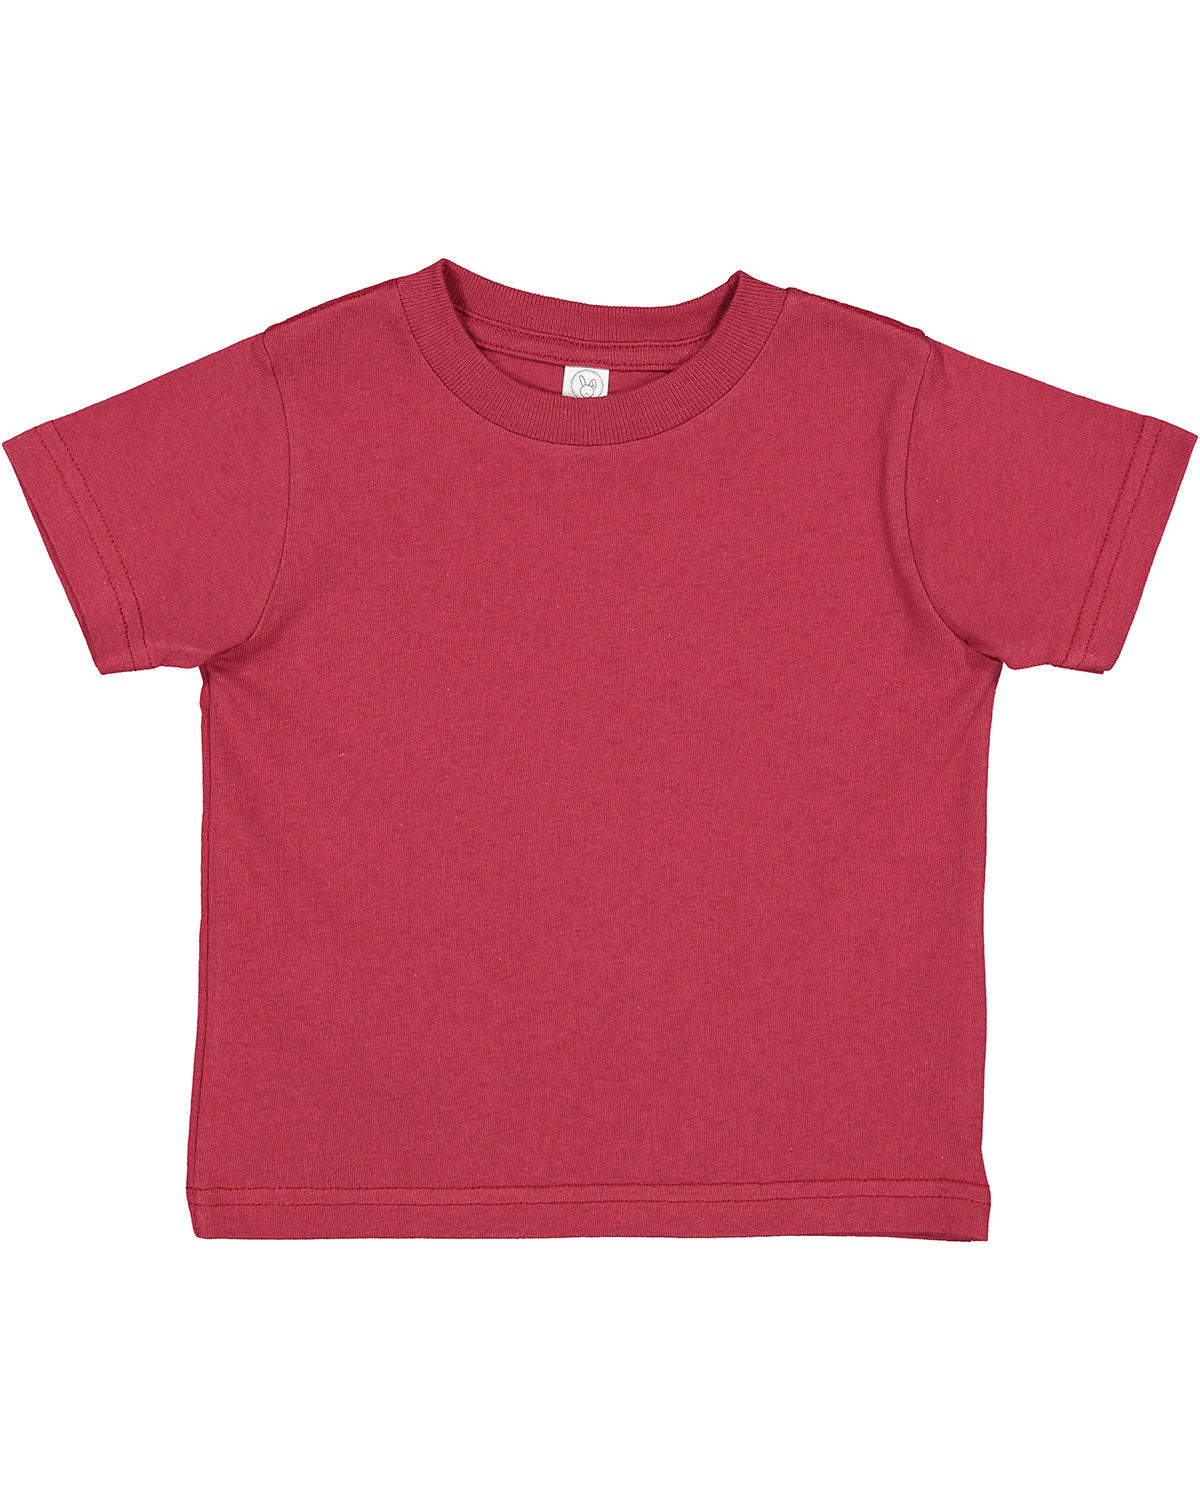 Rabbit Skins Toddler Cotton Jersey T-Shirt 2T / Garnet